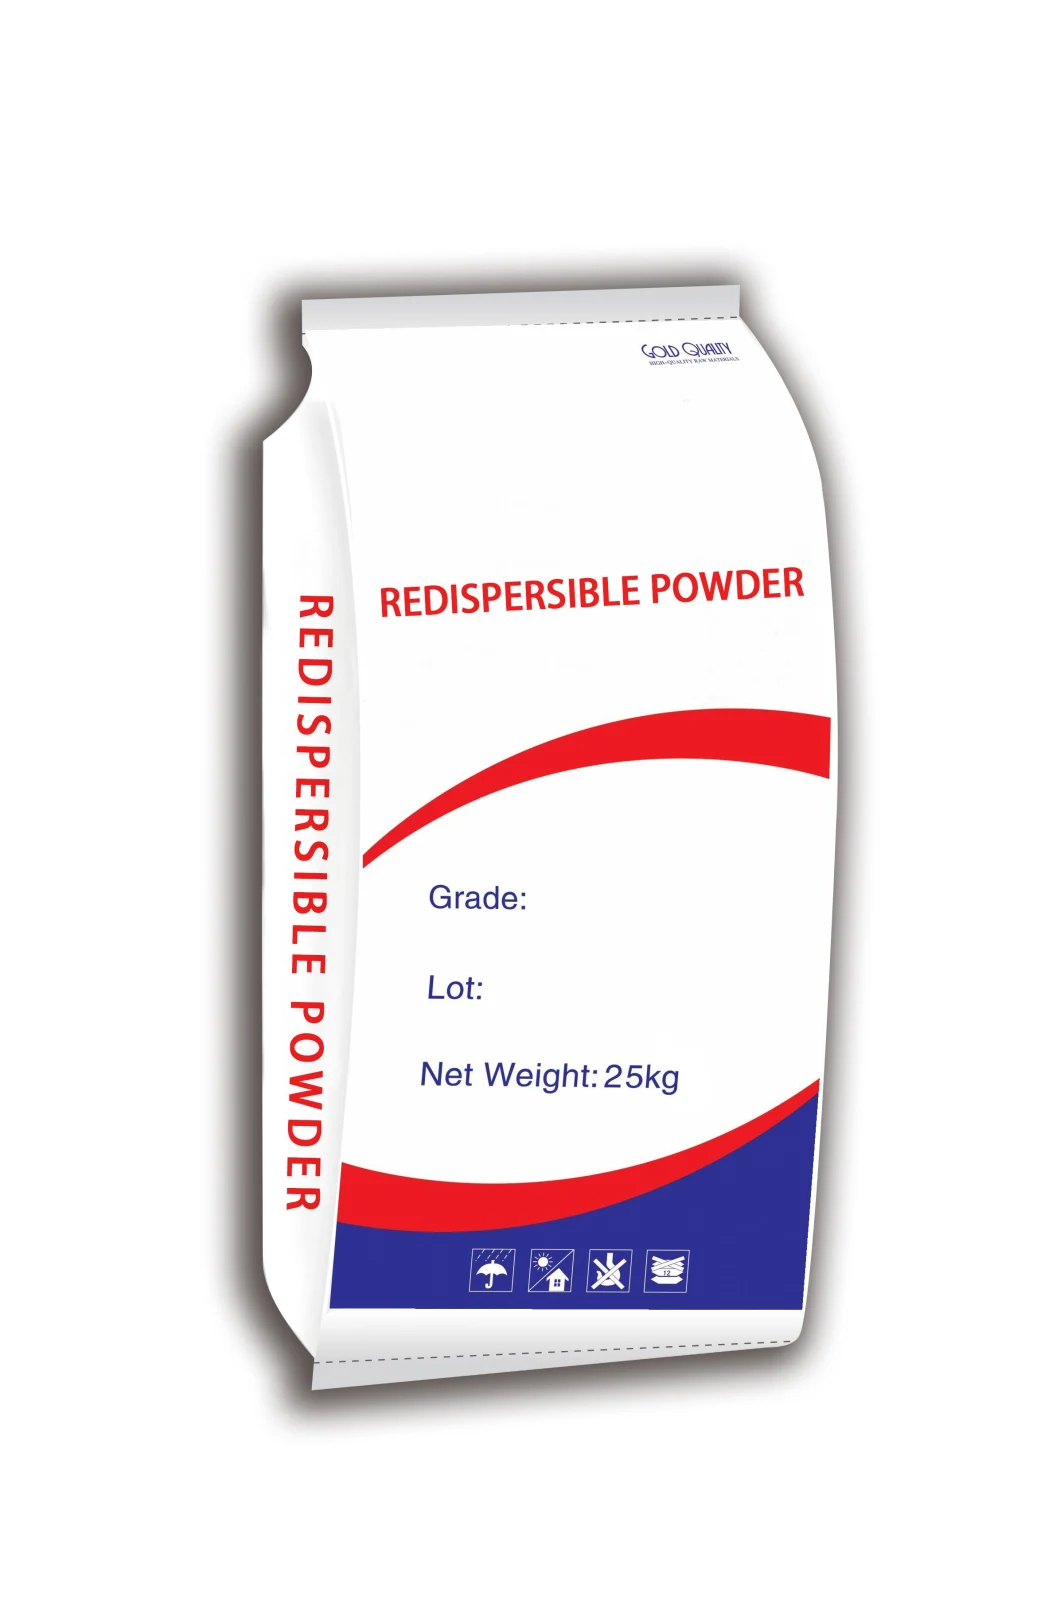 Resin Powder Redispersible Latex Powder Rdp for Putty Powder